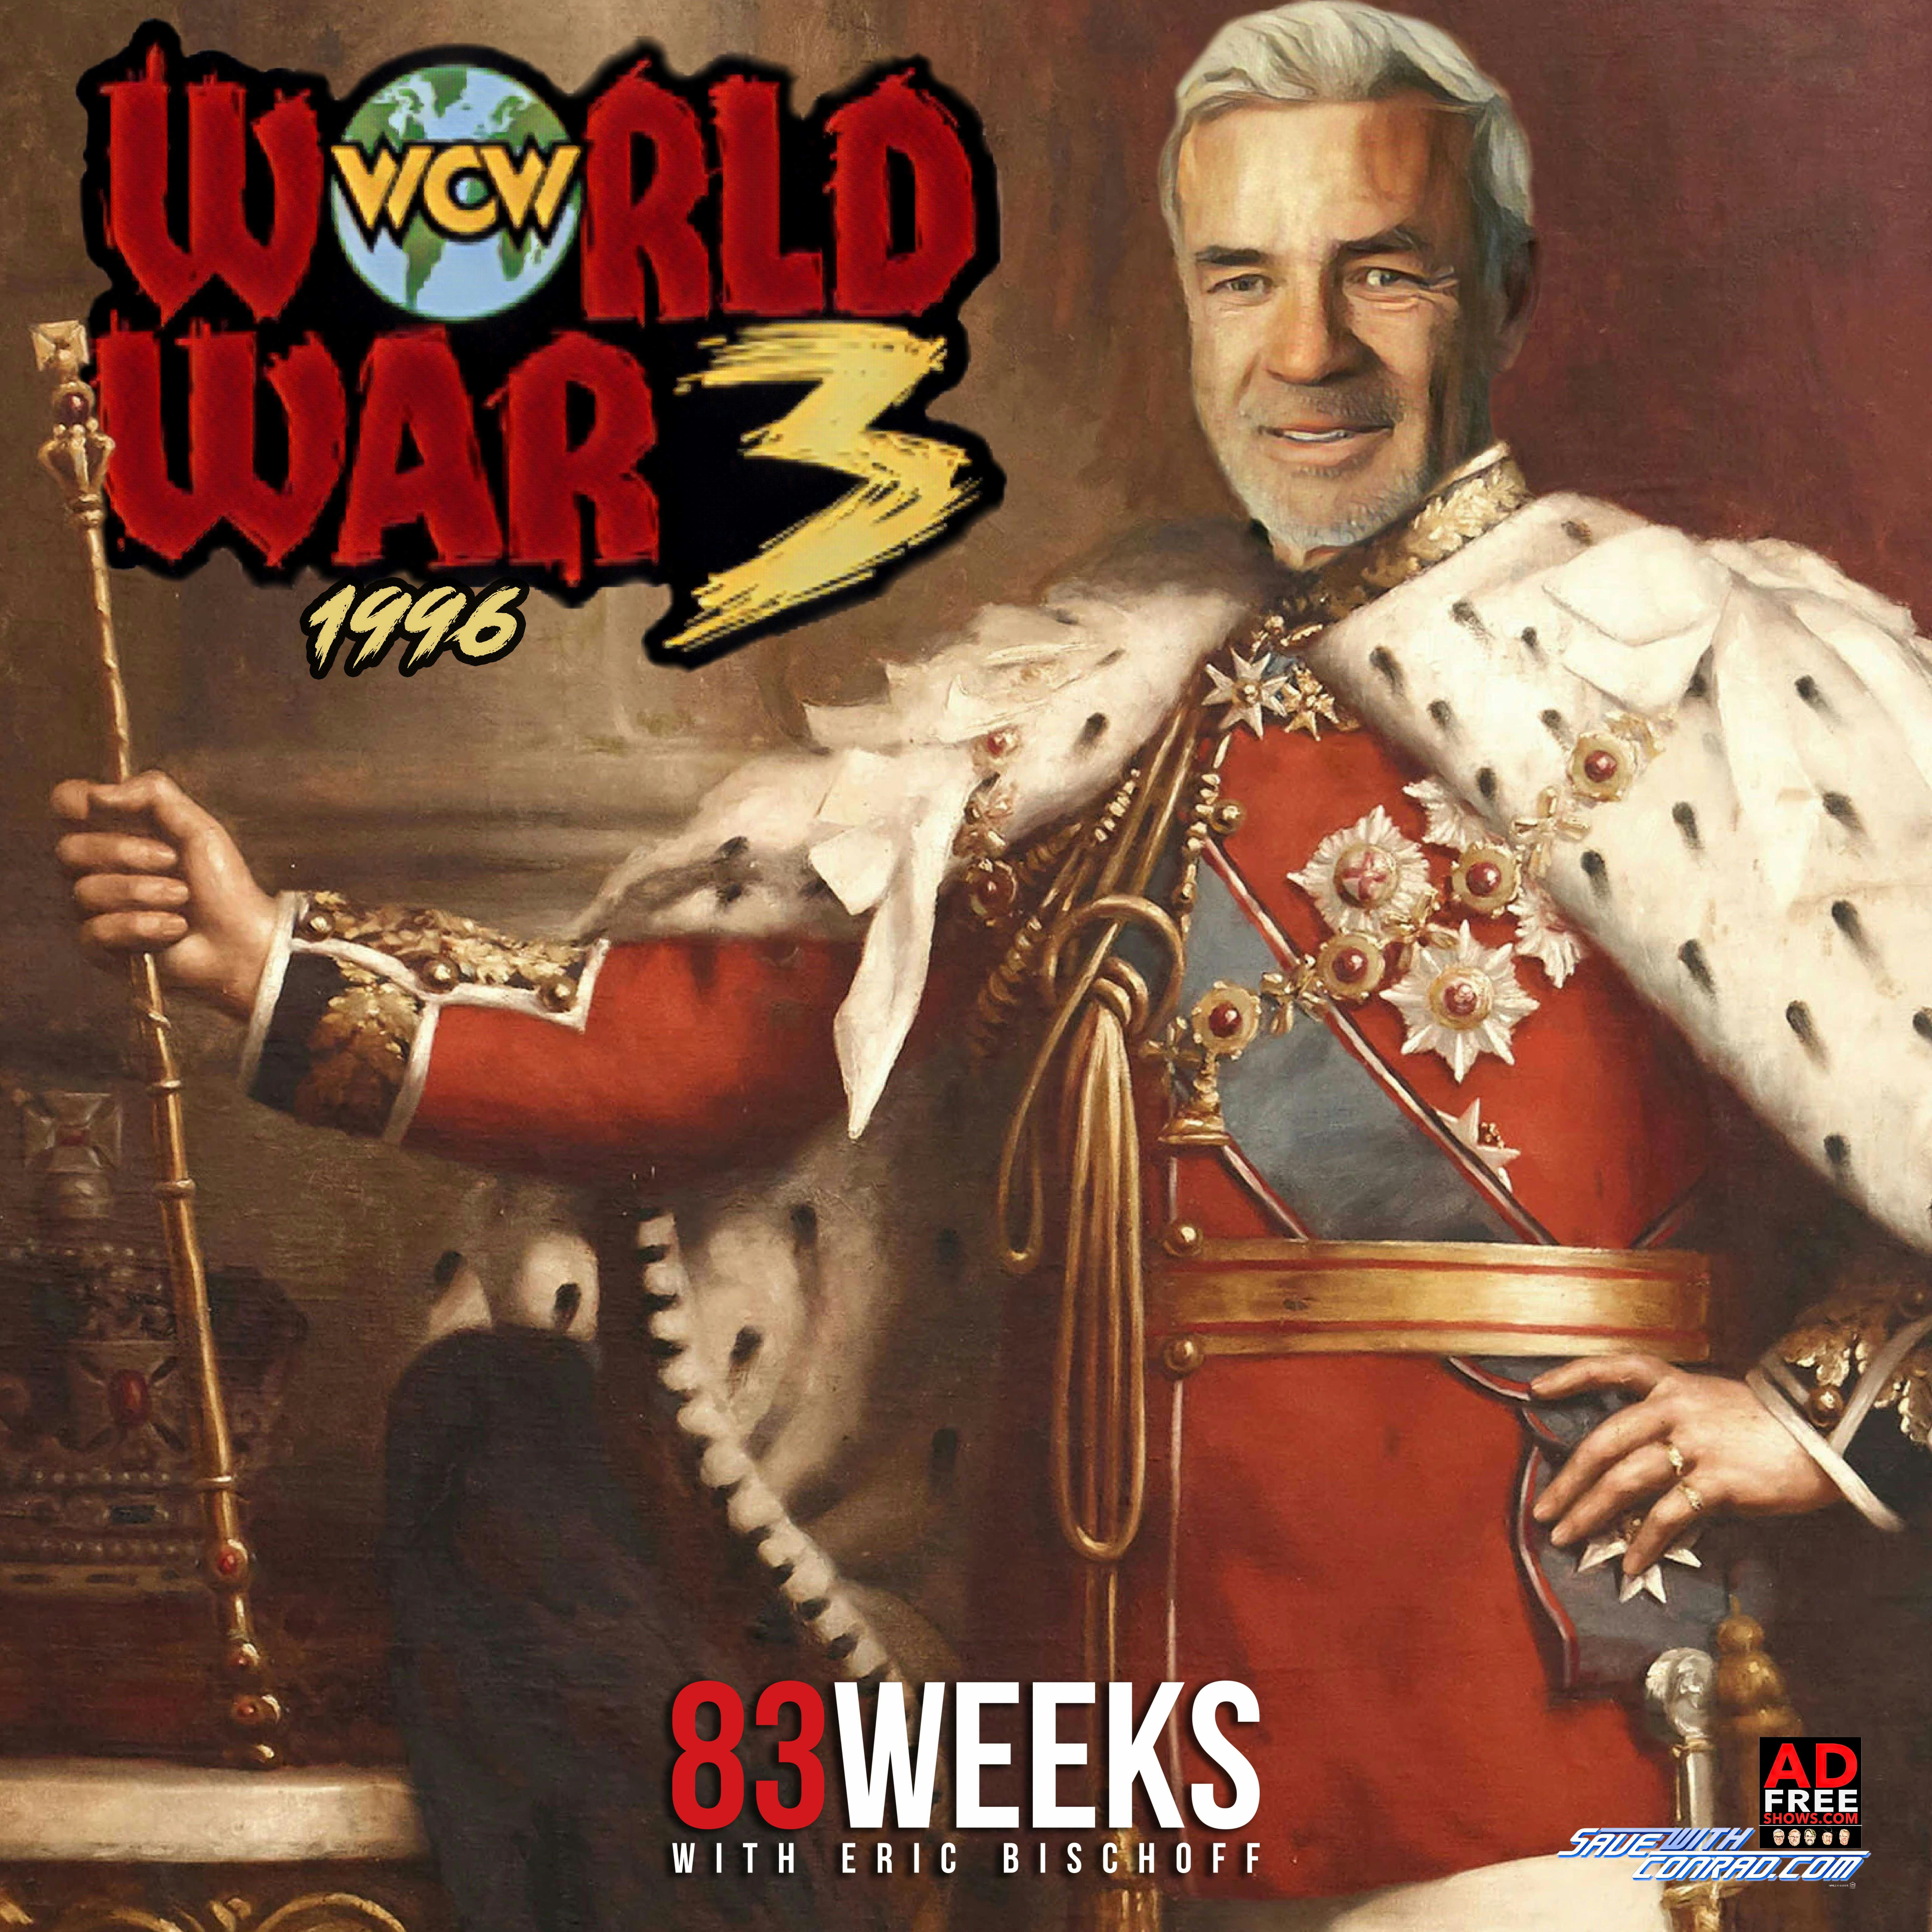 Episode 138: World War 3 1996